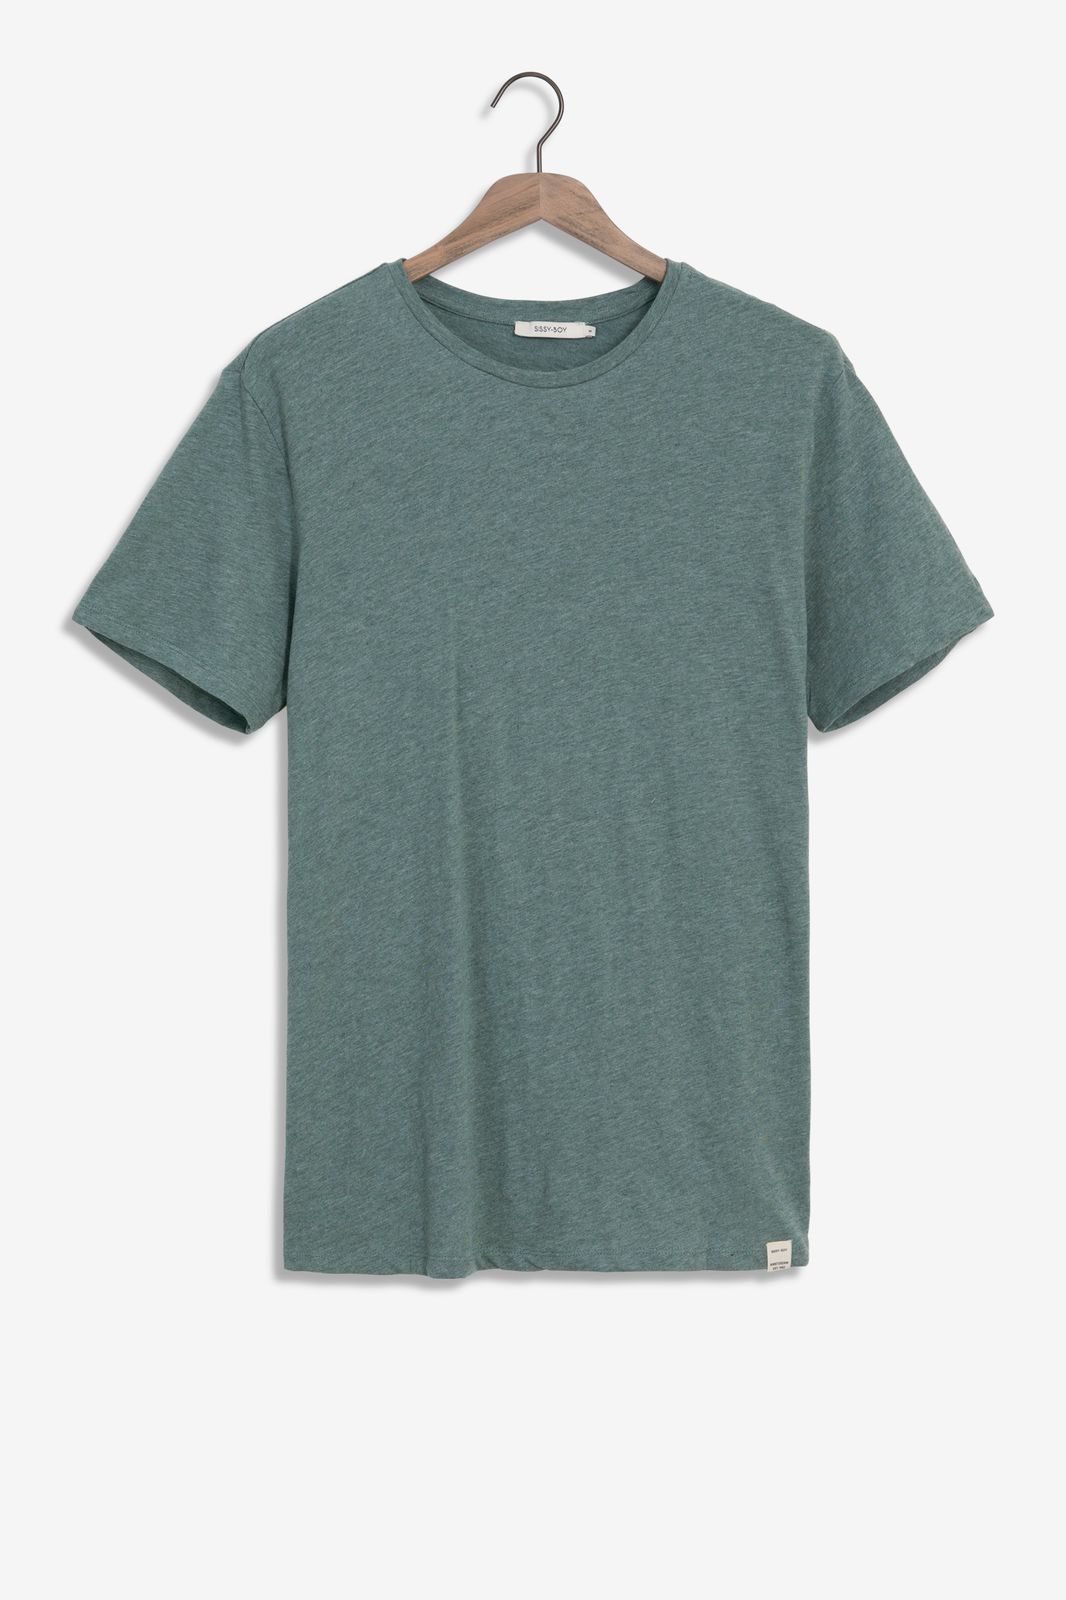 T-Shirt aus melierter Baumwolle - grün